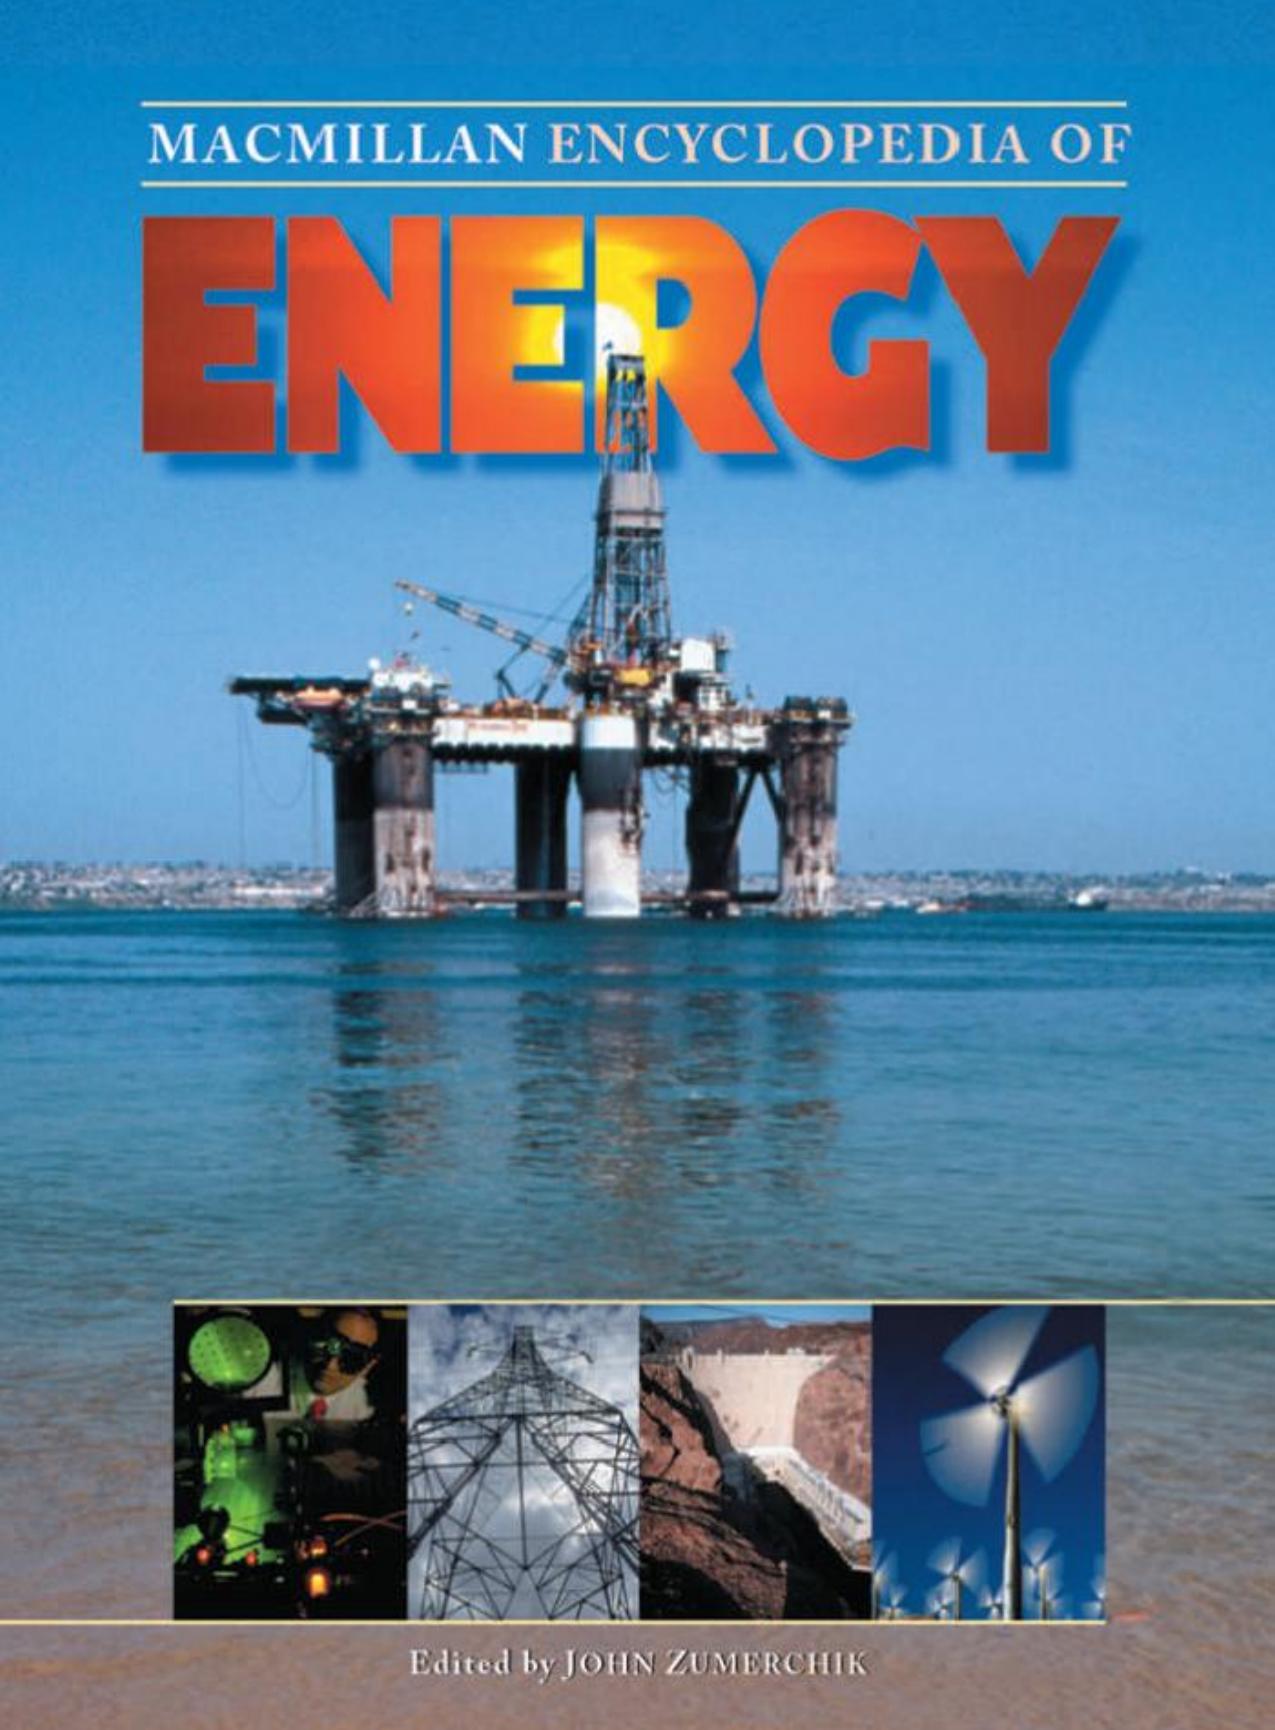 Macmillian Encyclopedia of Energy